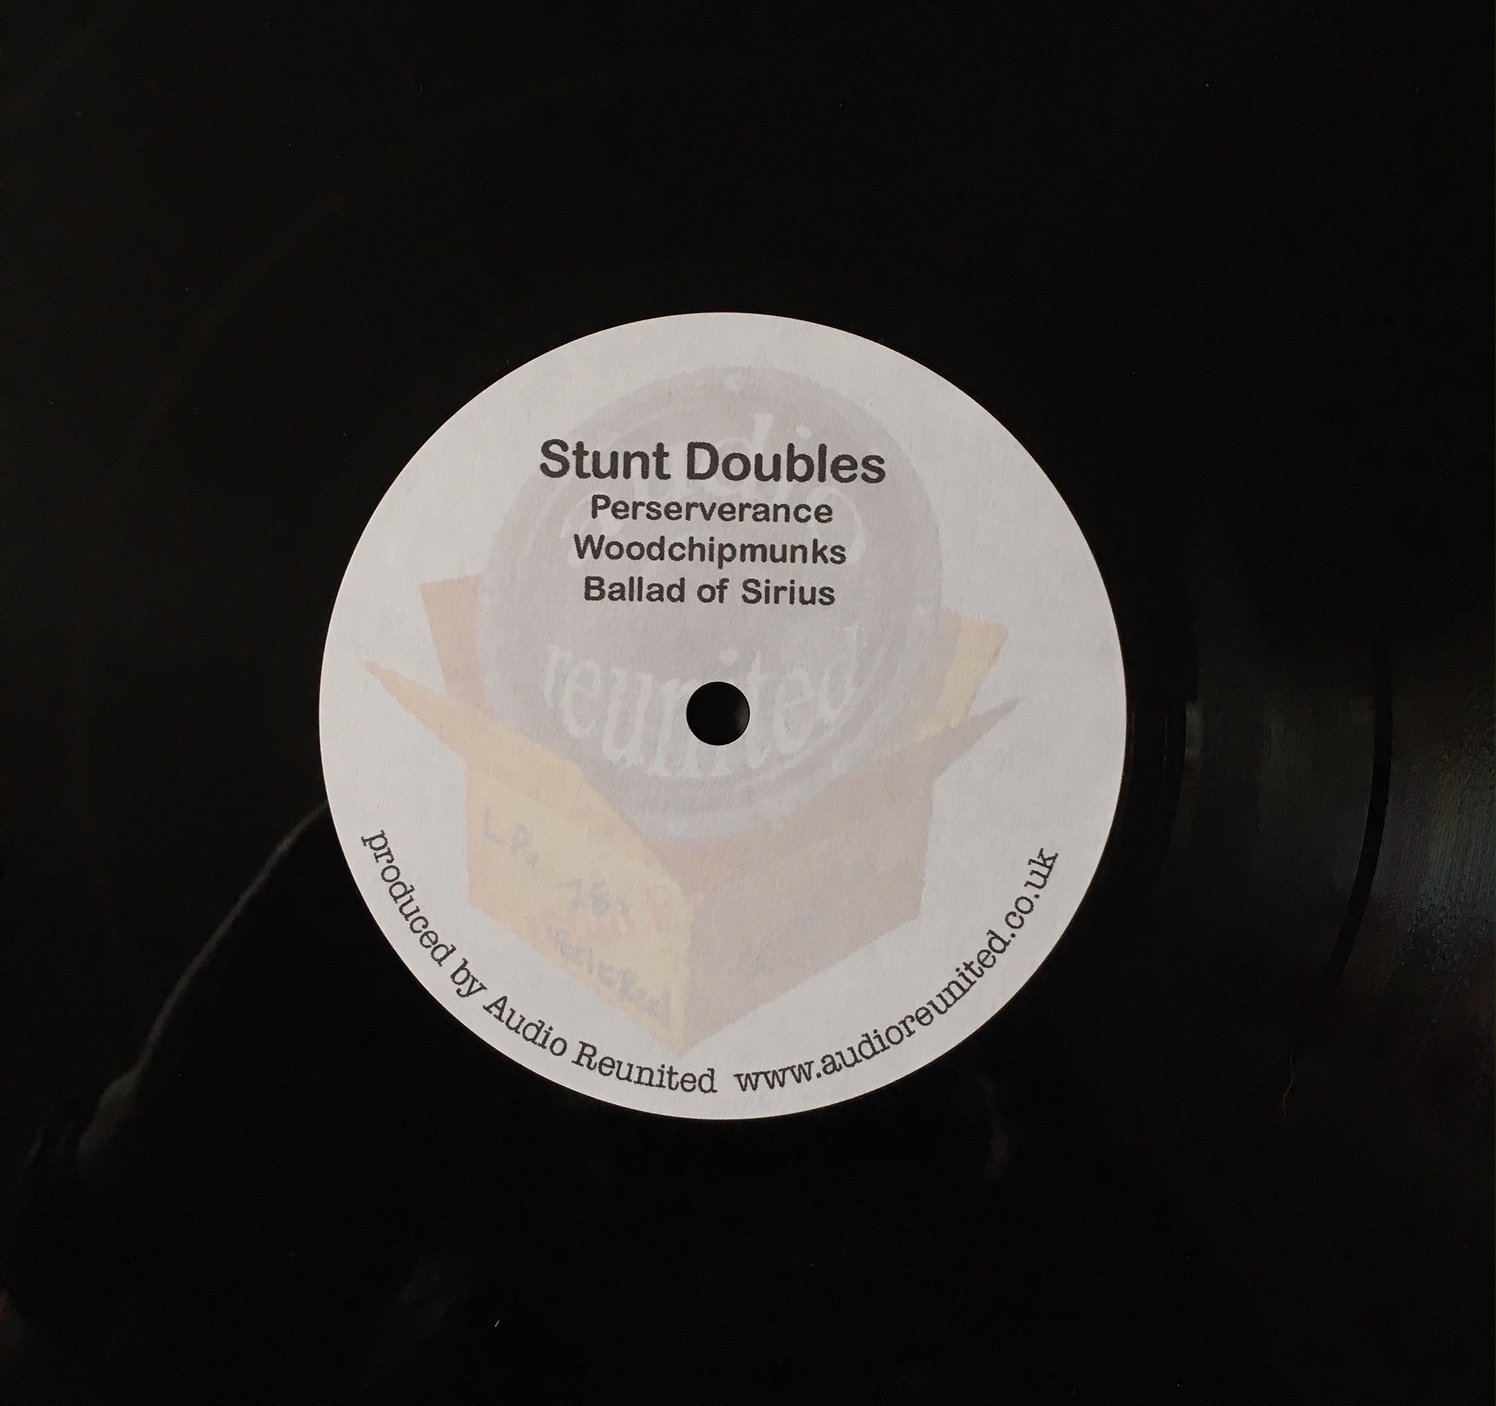 stunt doubles custom record label